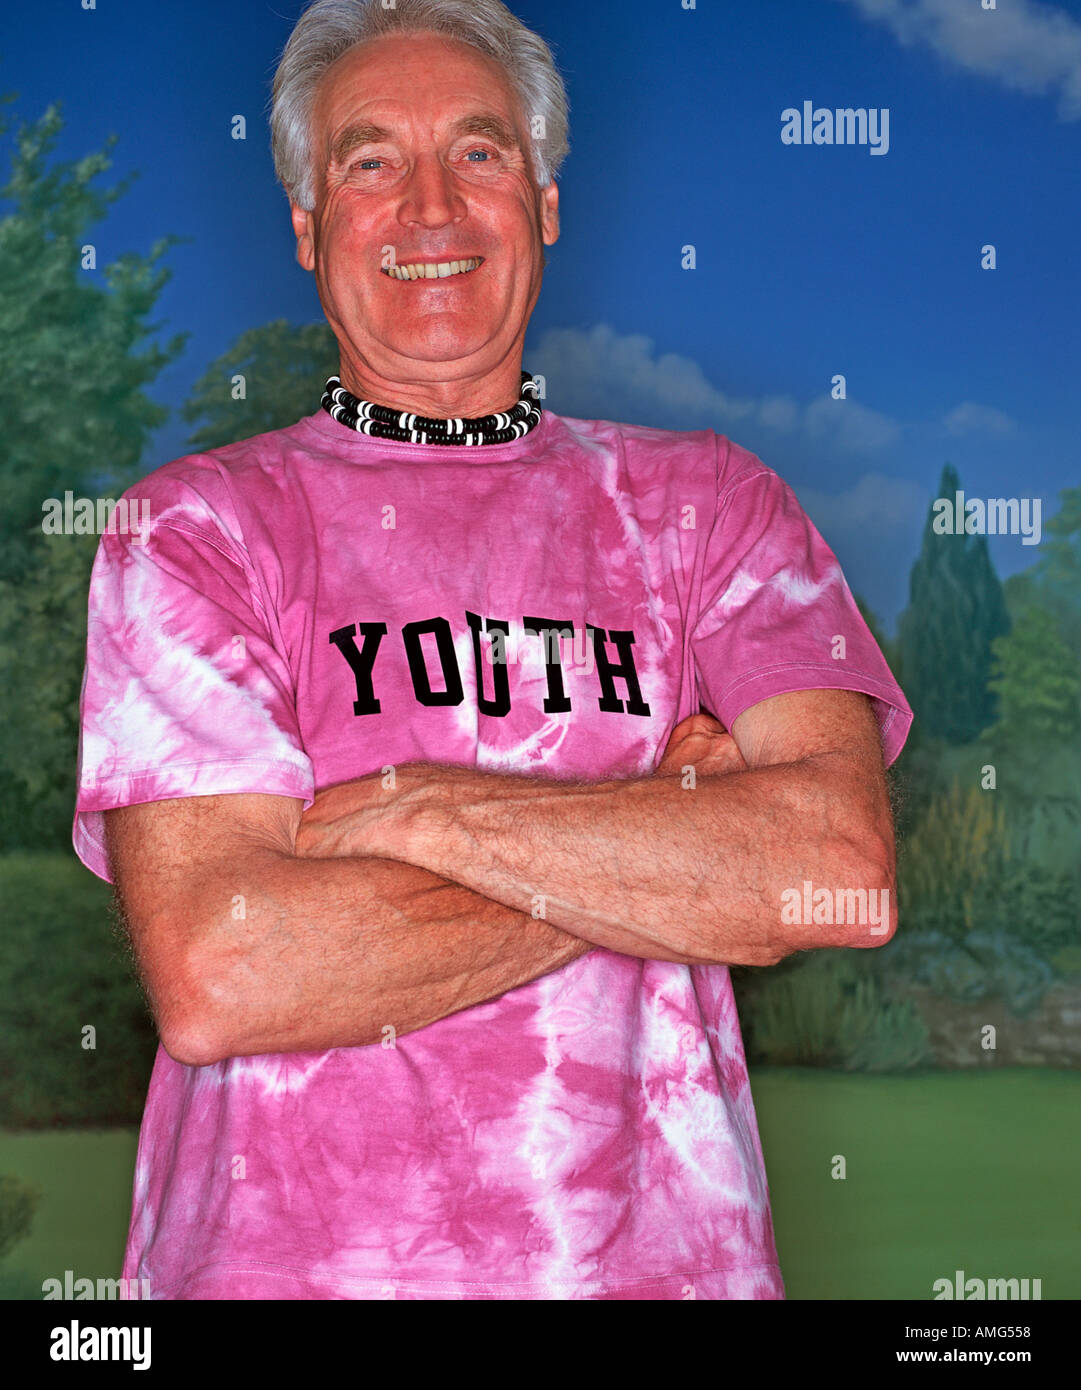 A portrait of a mature man wearing a T shirt against a garden background Stock Photo